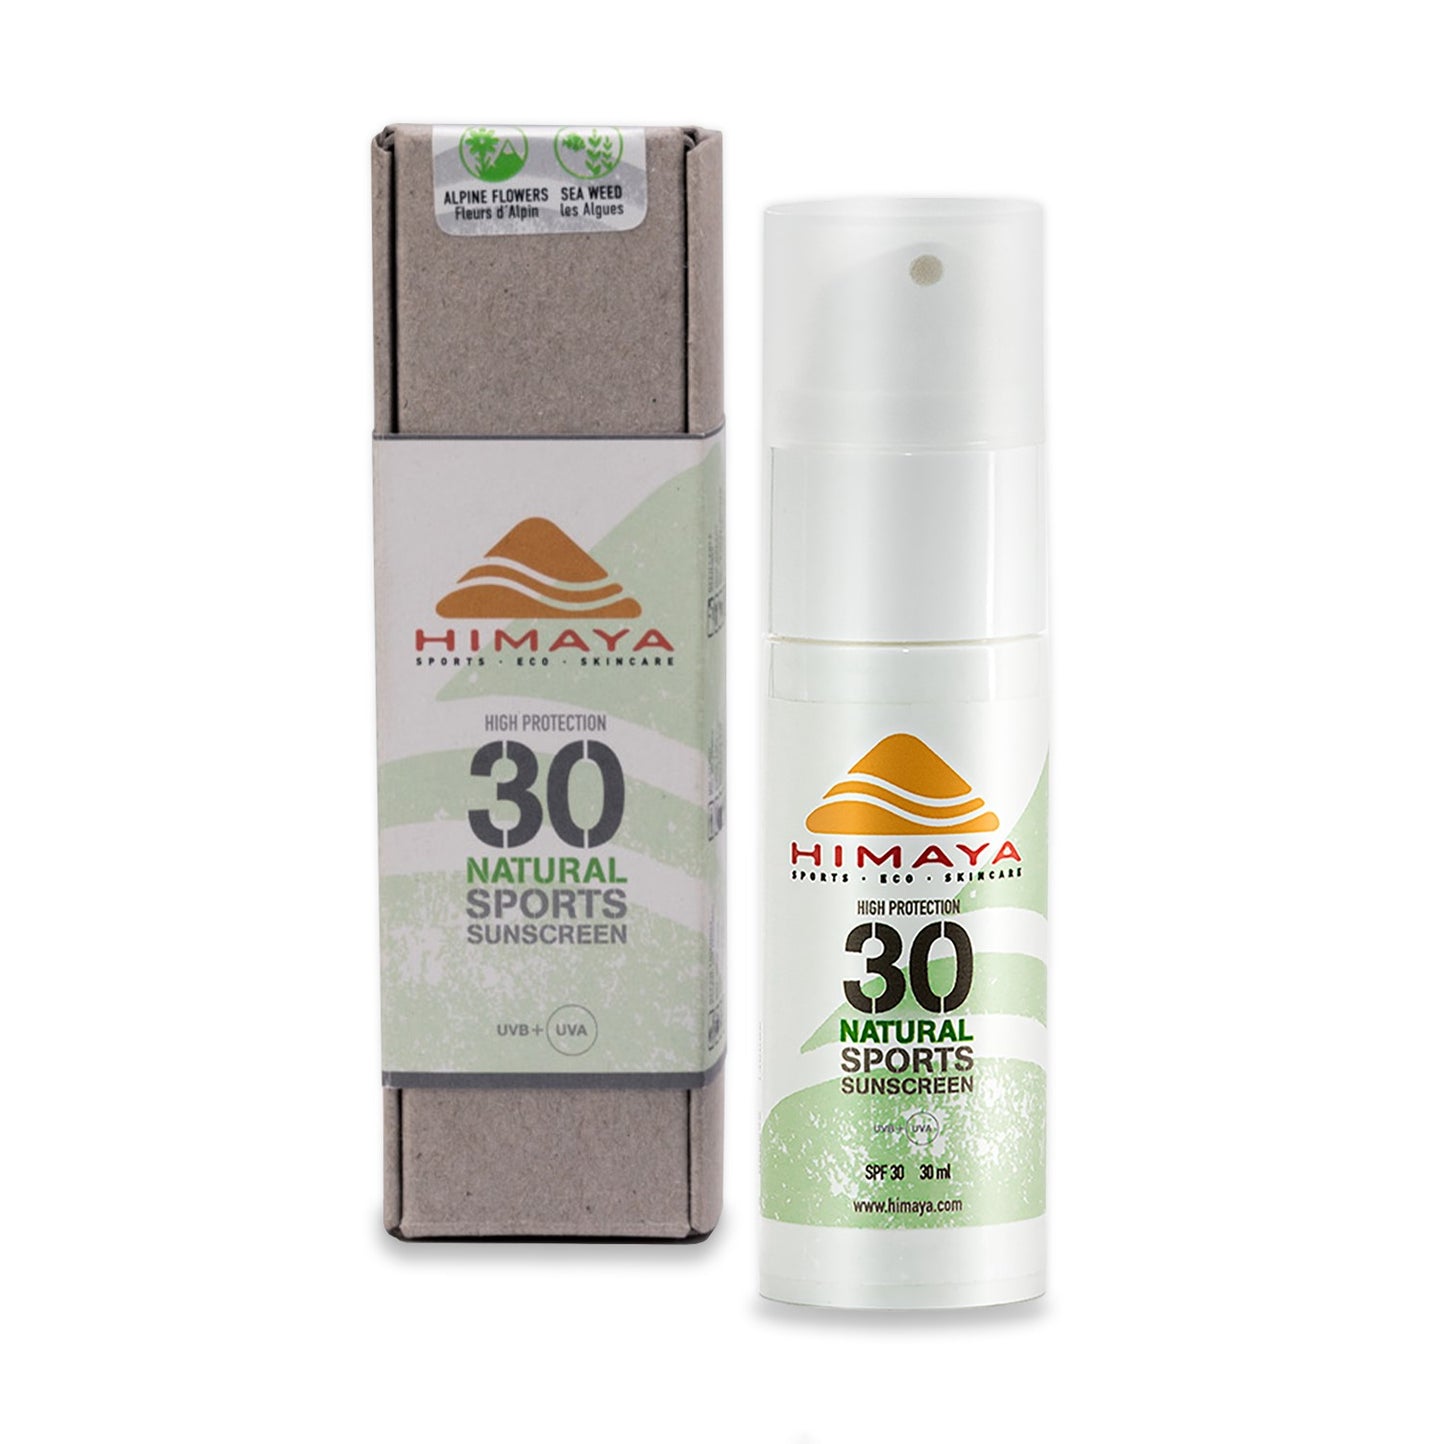 HIMAYA Natural Sunscreen SPF 30 - 30ml – Mineral - Zinc - Reef Safe -Refillable - UVA UVB Himaya